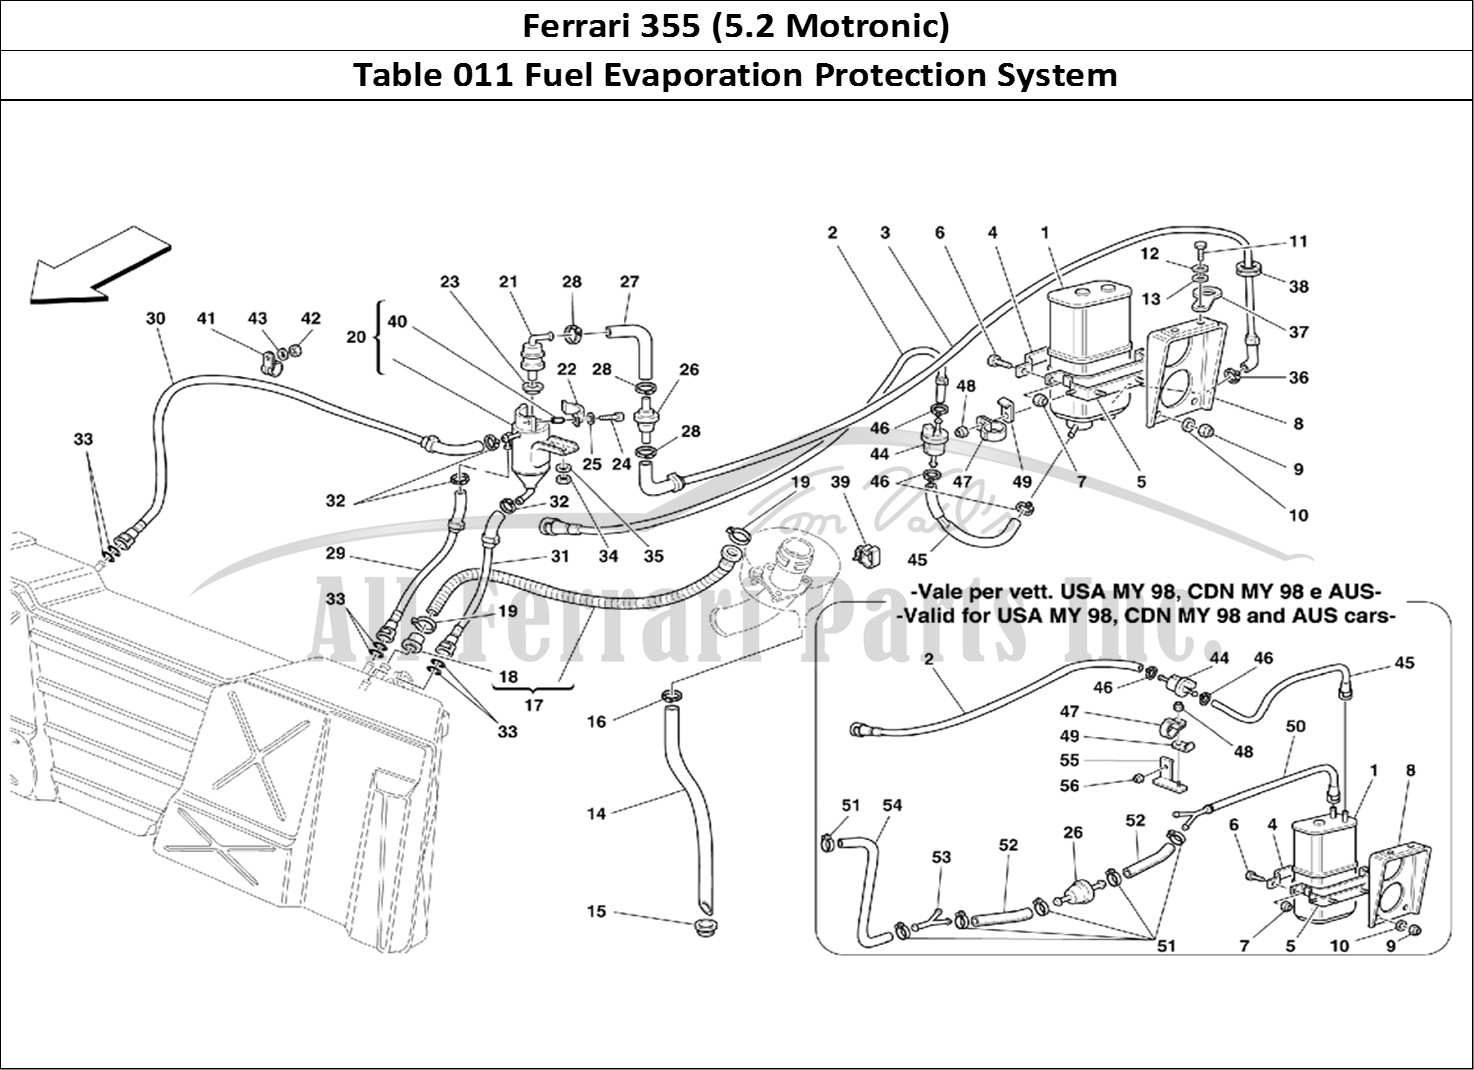 Ferrari Parts Ferrari 355 (5.2 Motronic) Page 011 Antievaporation Device